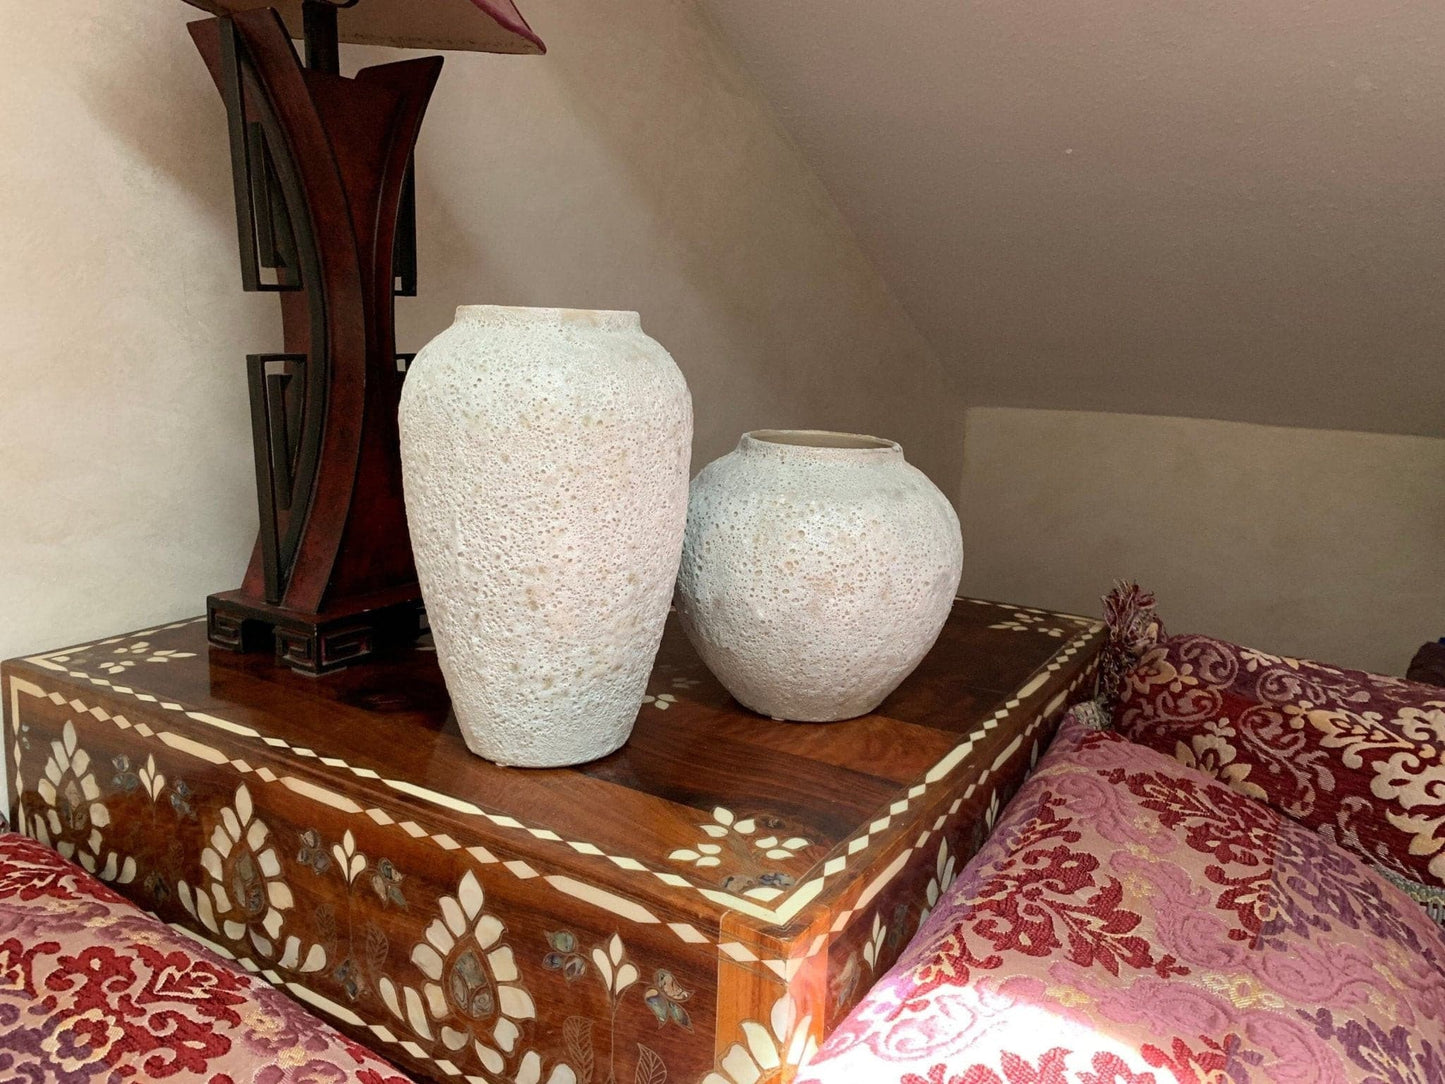 Ceramic Bubble Glaze Textured Vase - -